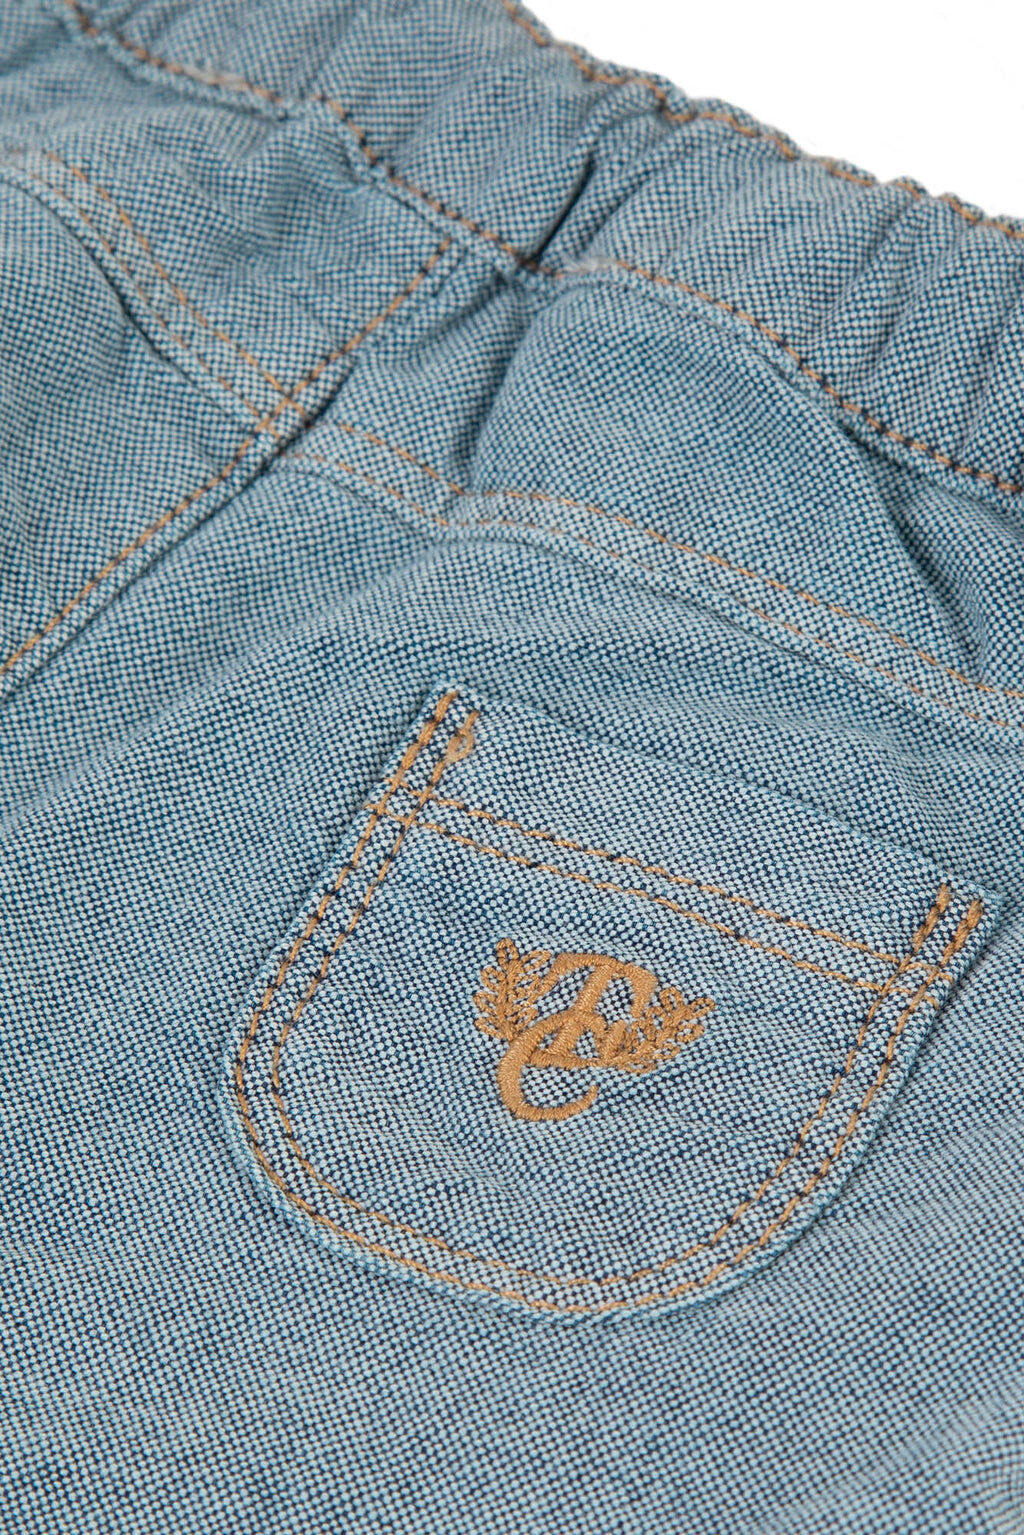 Pantalon - Coton bleu marin